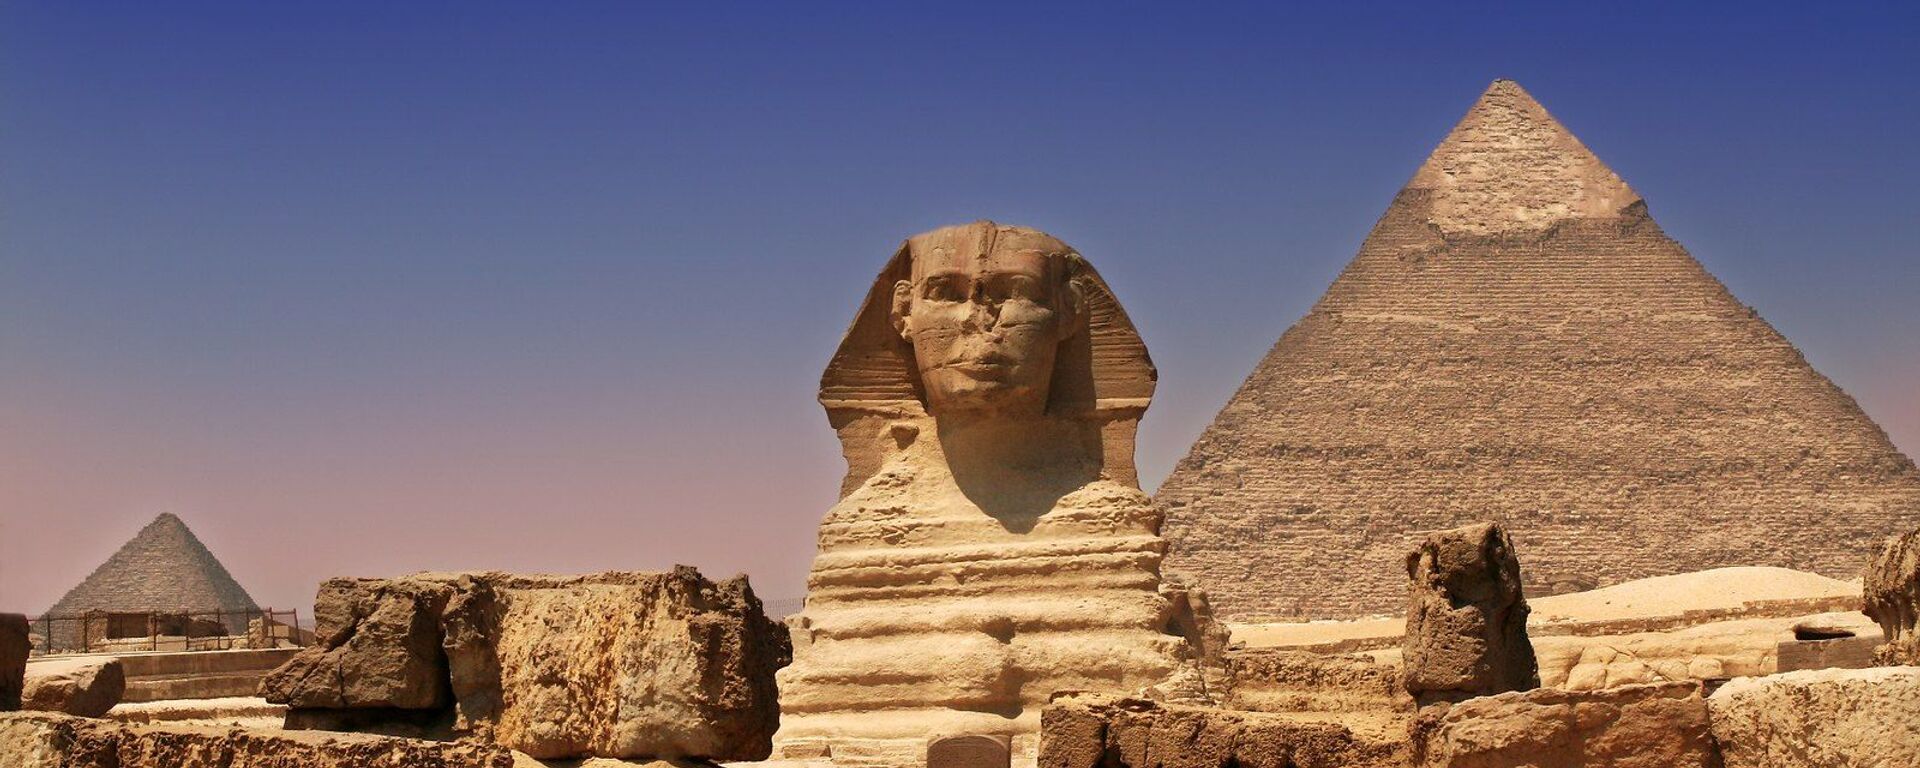 Giza Pyramids & Sphinx - Egypt - Sputnik International, 1920, 03.02.2021